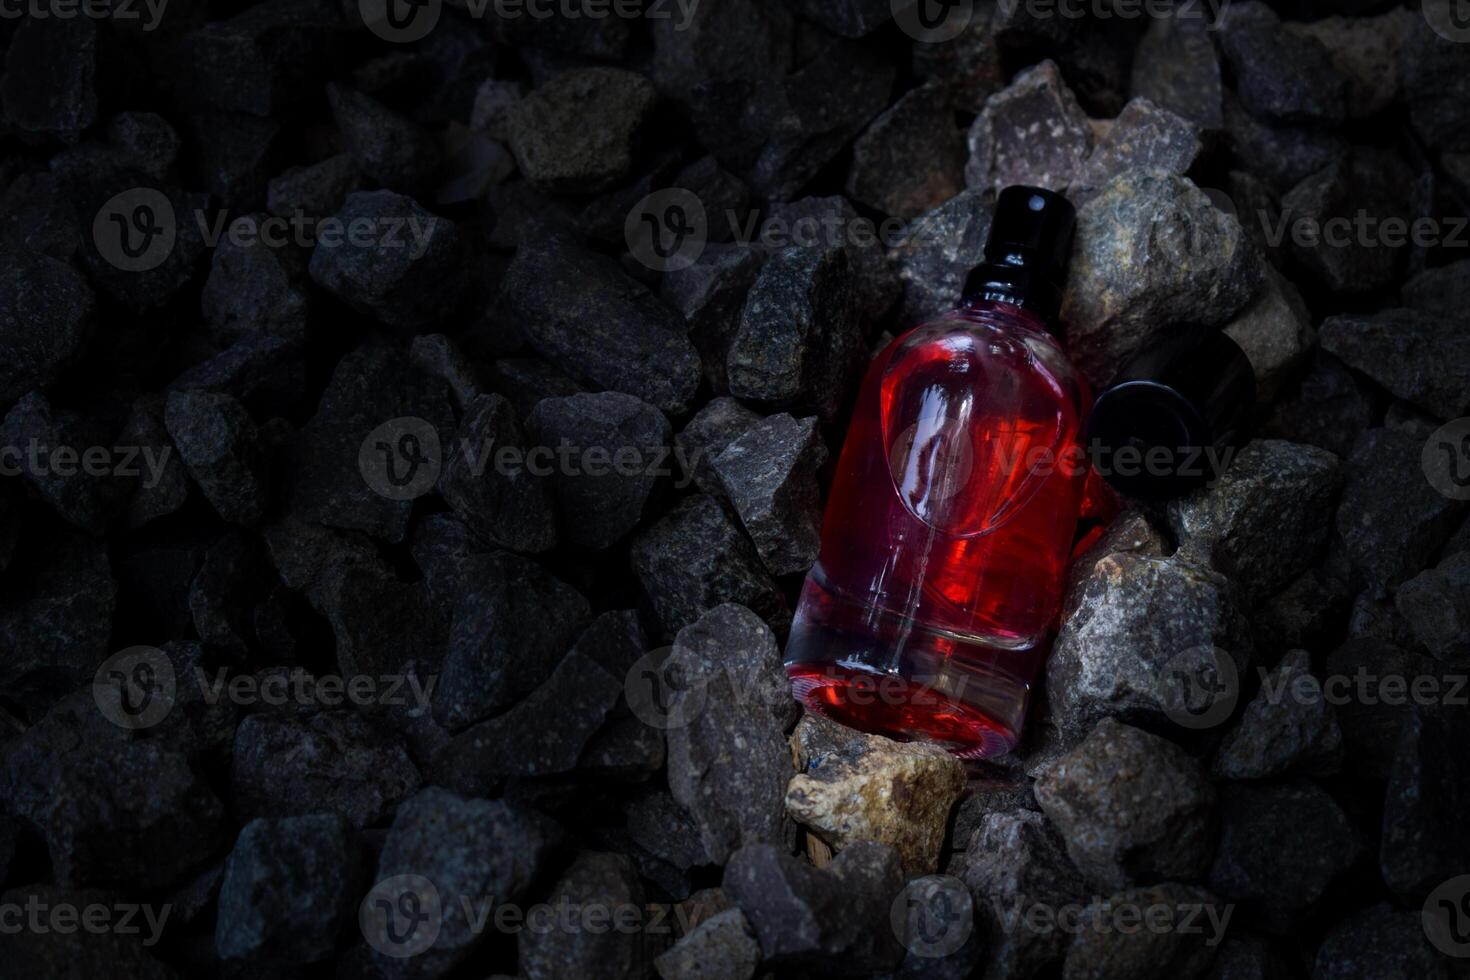 parfym röd transparent flaska i grus eller korall bakgrund foto